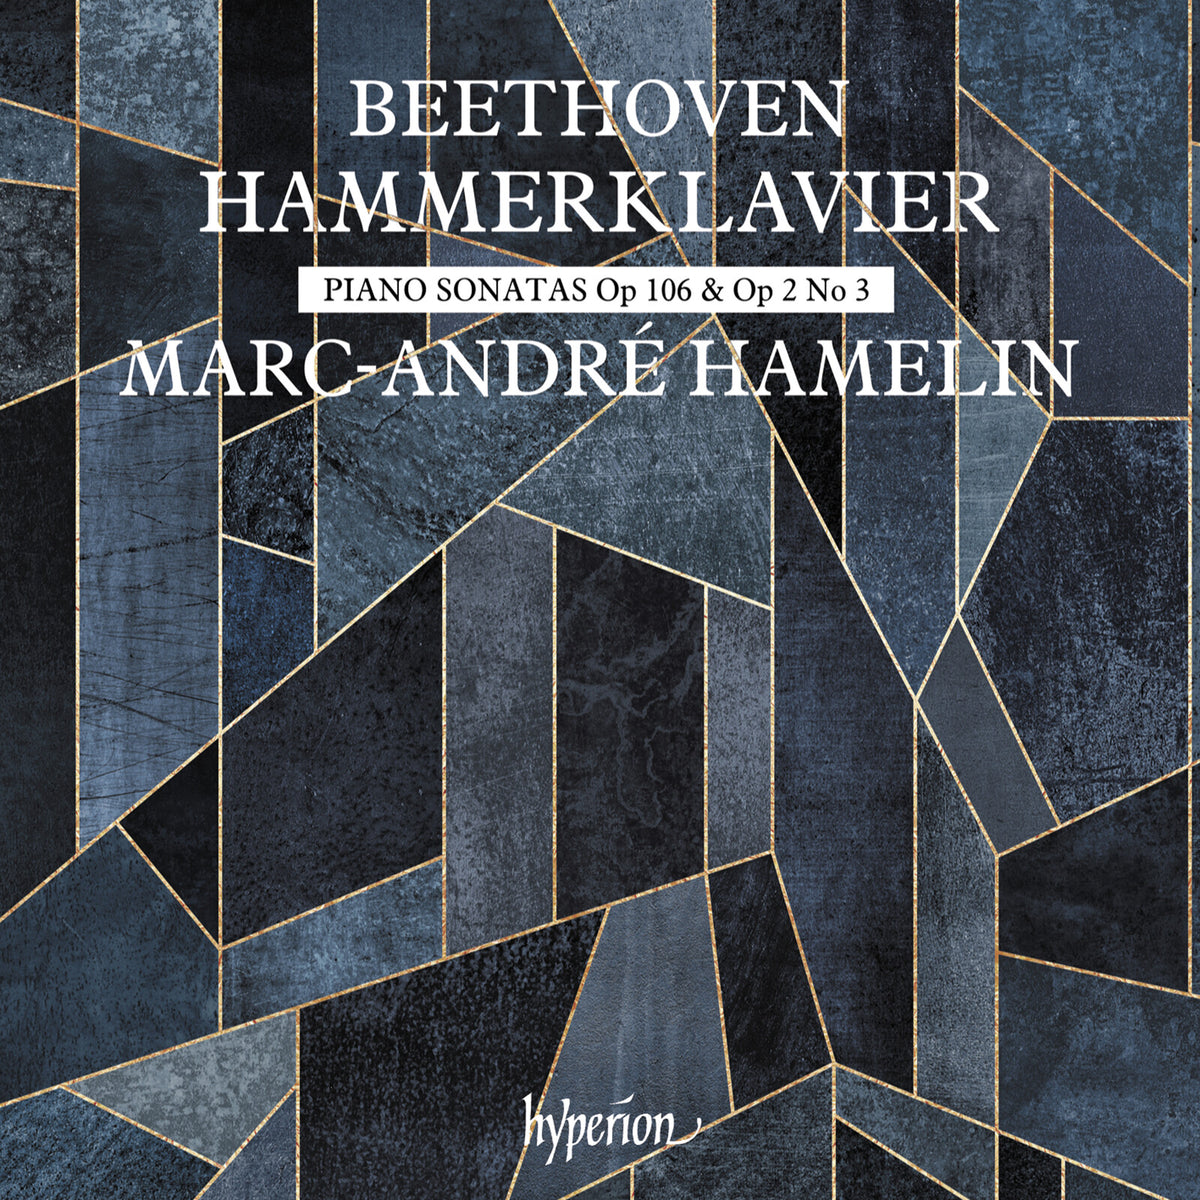 Marc-Andre Hamelin - Beethoven: Hammerklavier - CDA68456